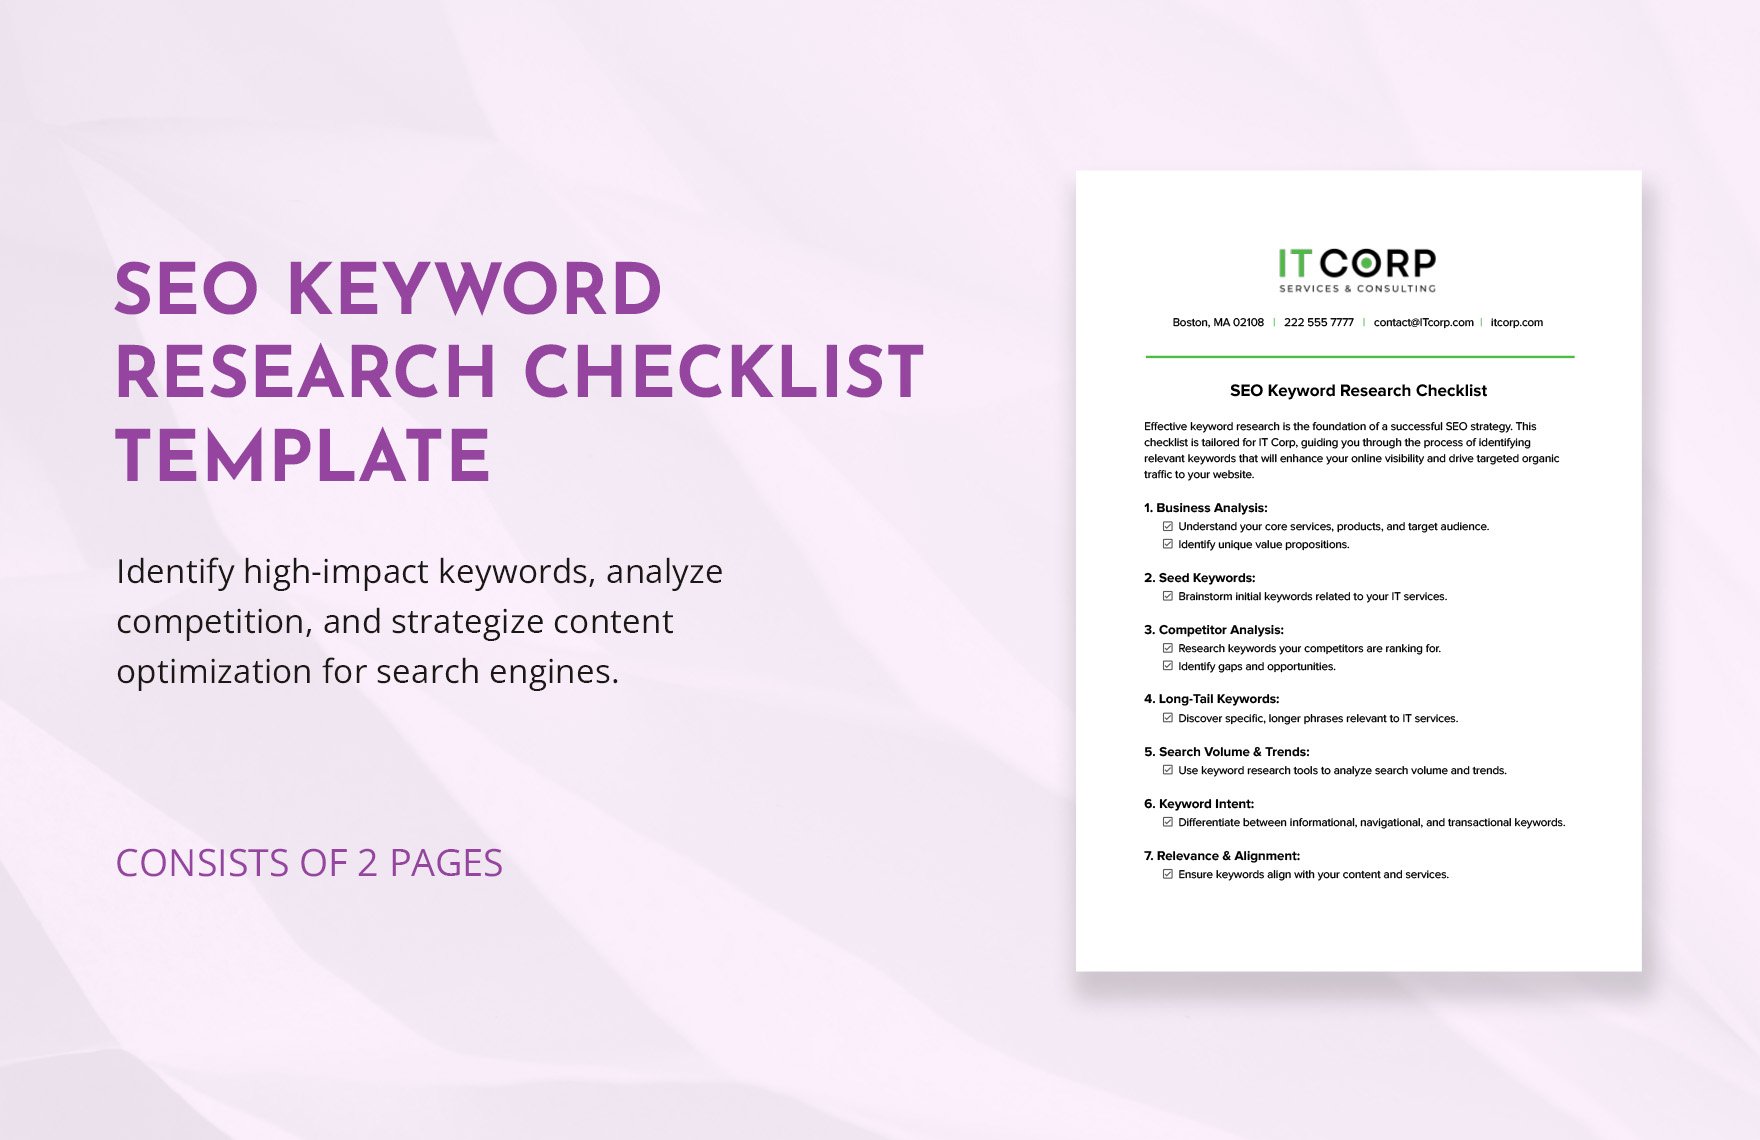 SEO Keyword Research Checklist Template